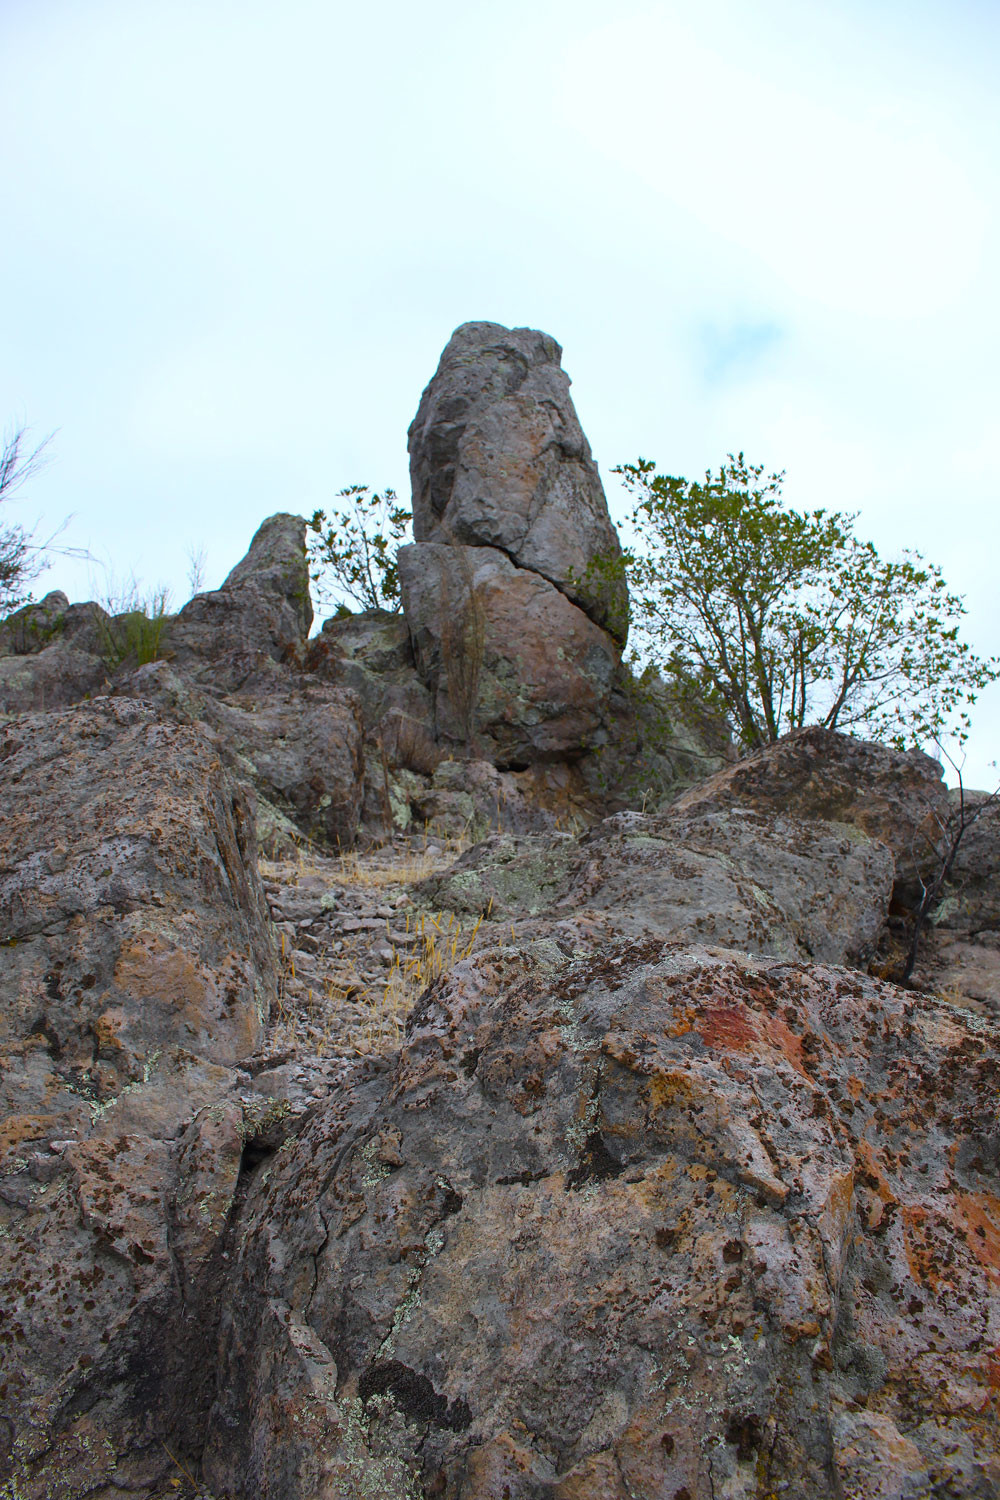 Craggy Rocks in the Vineyard